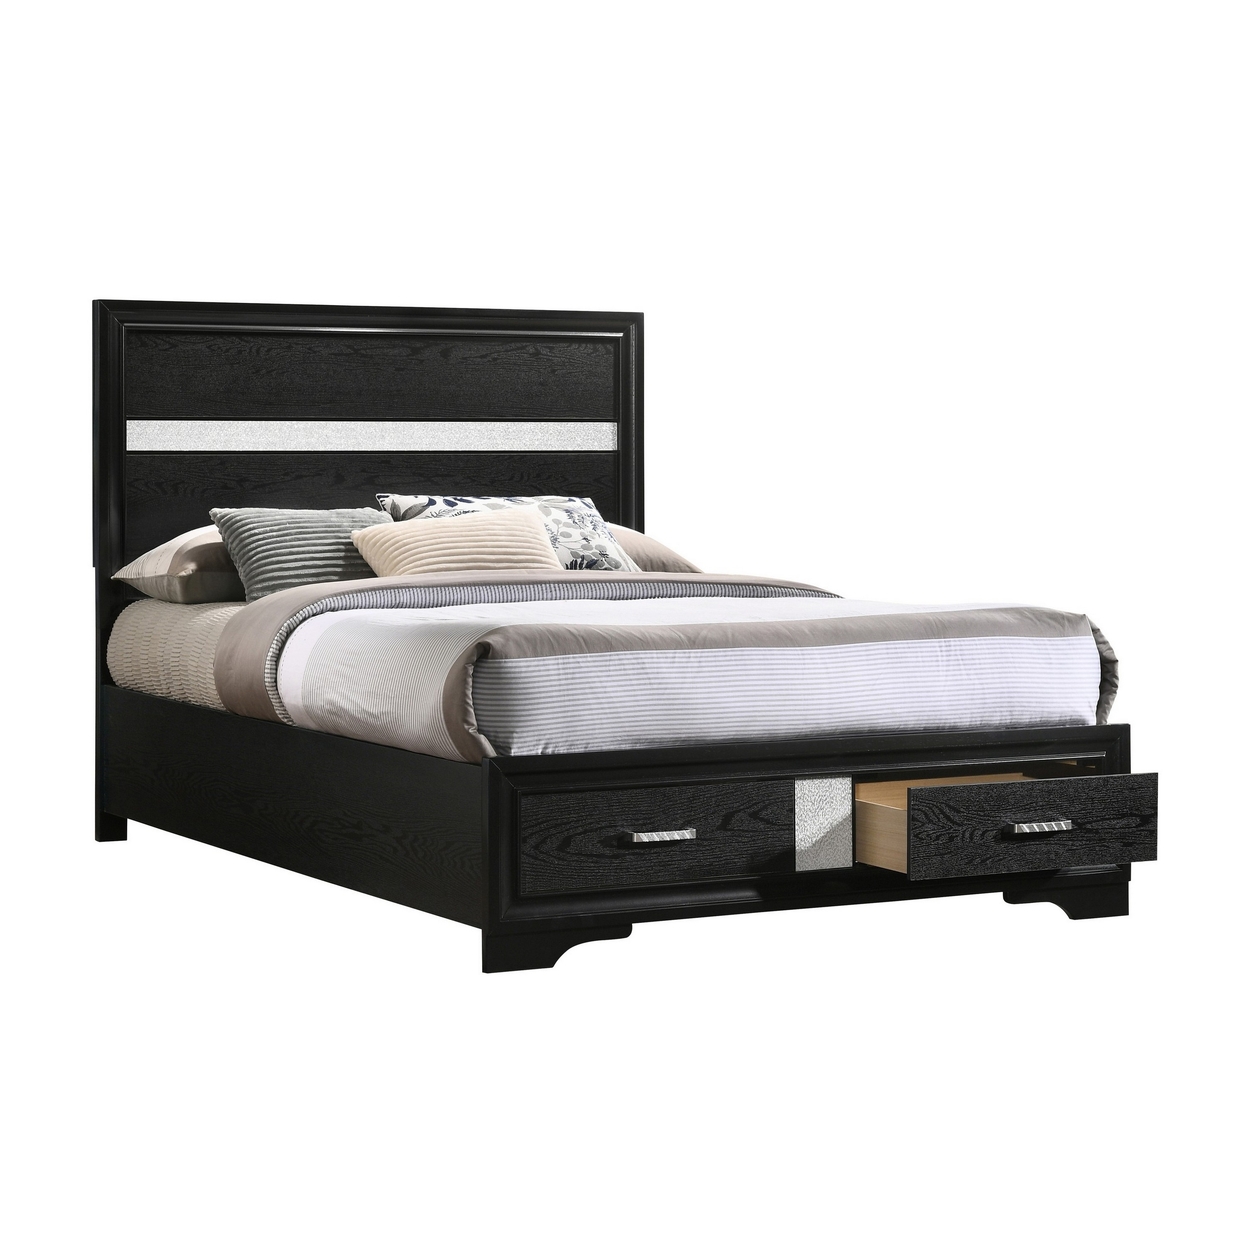 Vino Full Size Panel Bed With 2 Storage Drawers, Acrylic Glitter, Black- Saltoro Sherpi